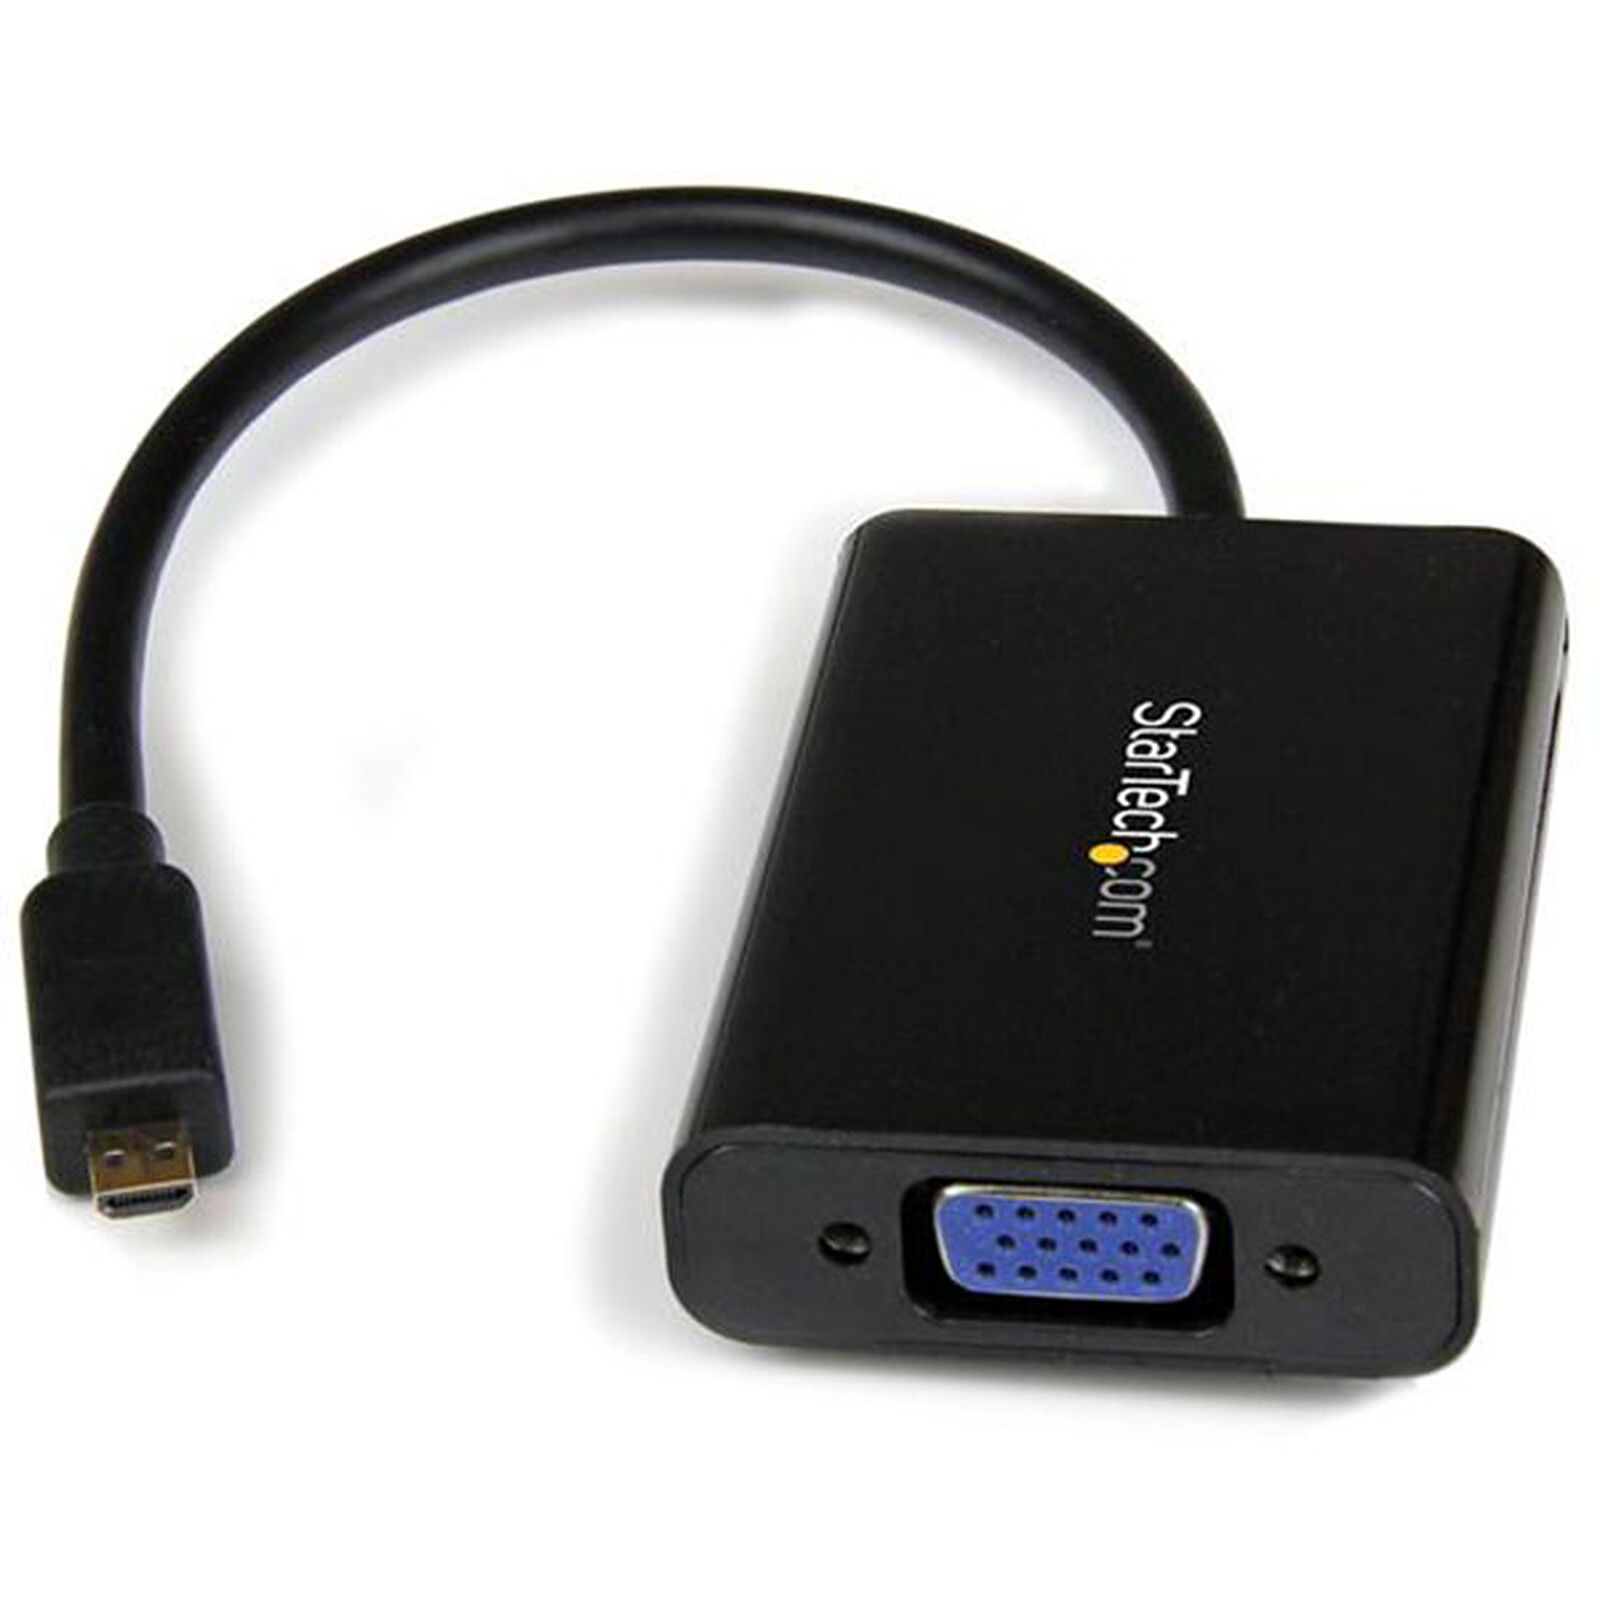 Adaptateur Micro HDMI vers VGA Convertisseur HDMI Mâle vers VGA Femelle  avec Câble Jack 3.5 1080P